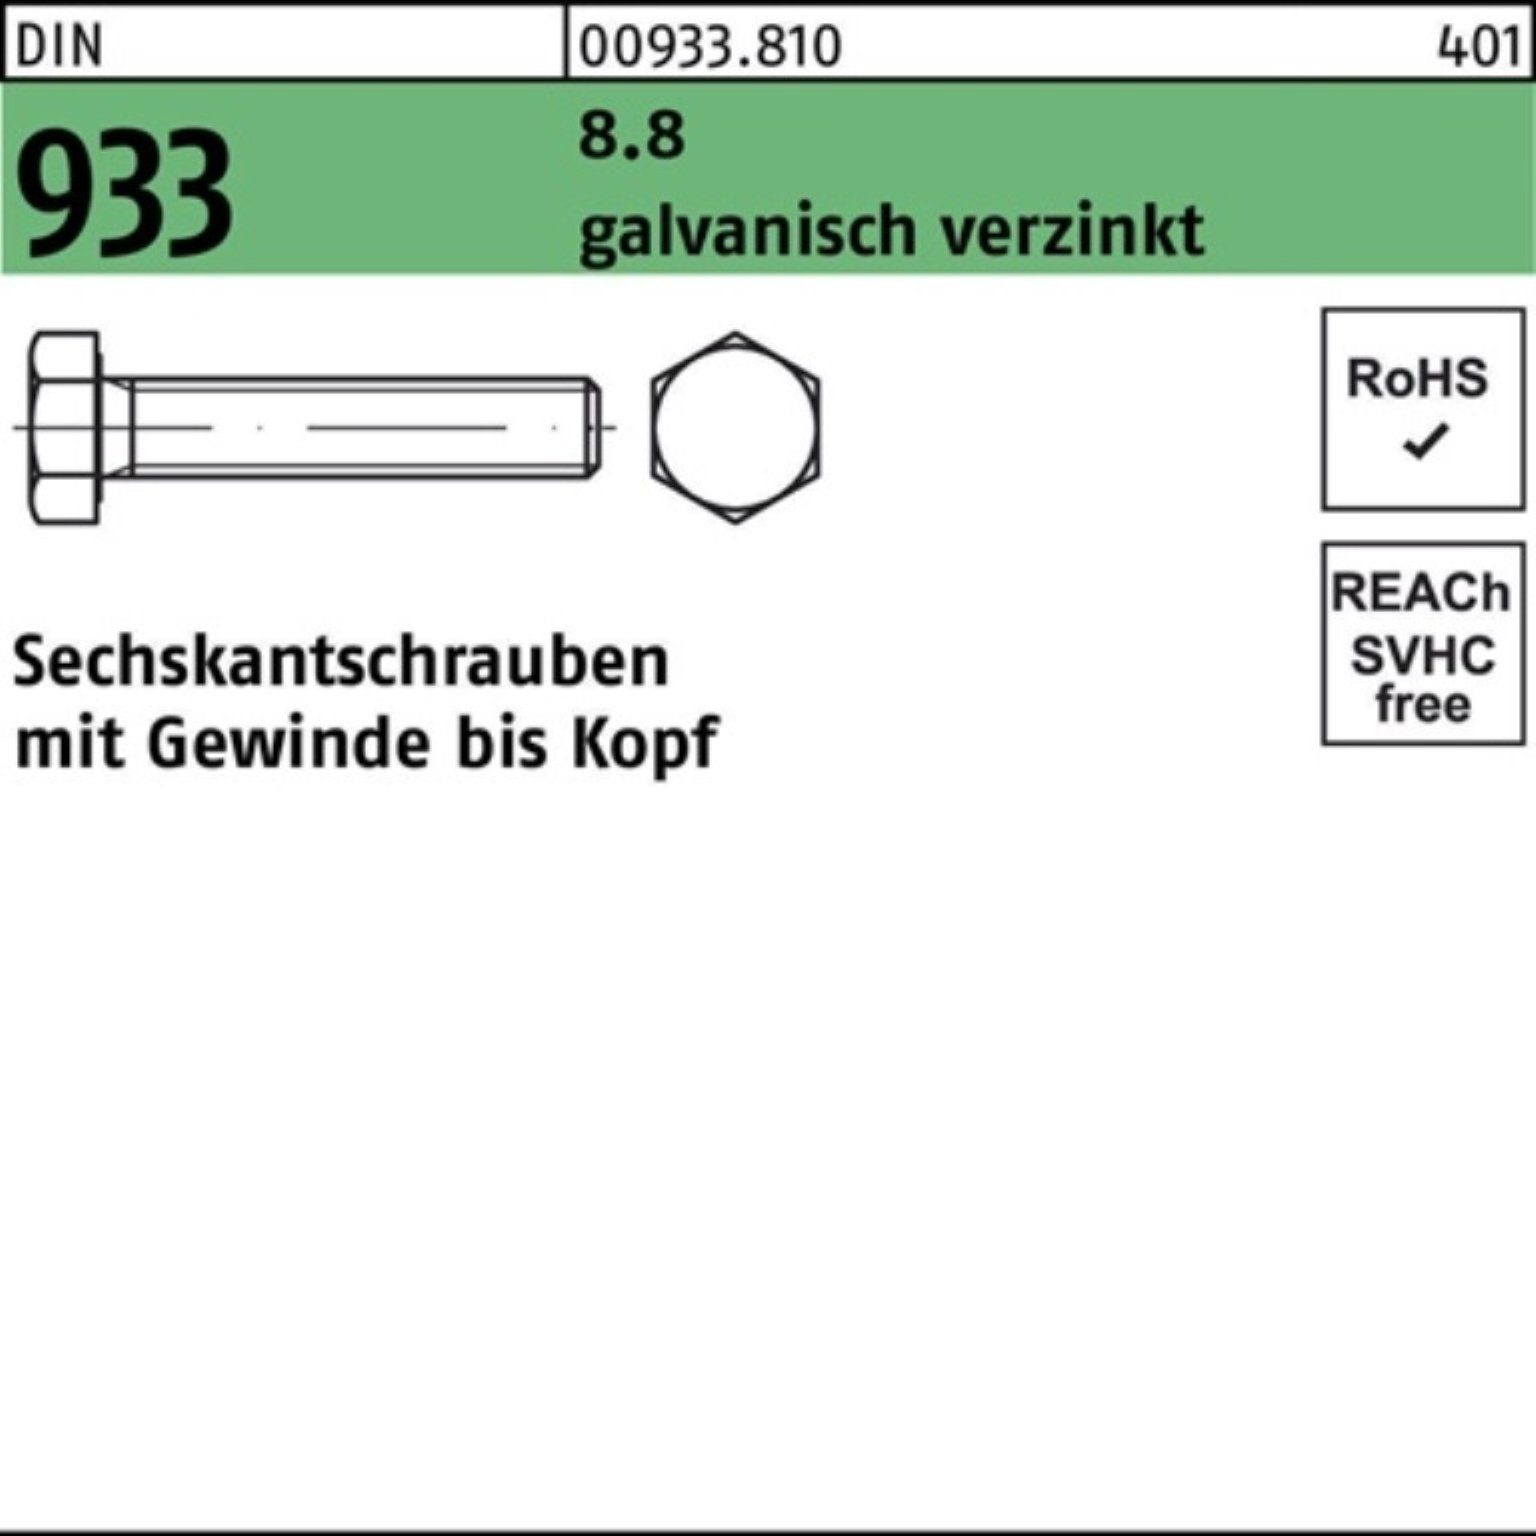 Preiswert Reyher Sechskantschraube 100er Pack Sechskantschraube 120 VG 1 8.8 Stü 933 DIN M27x galv.verz